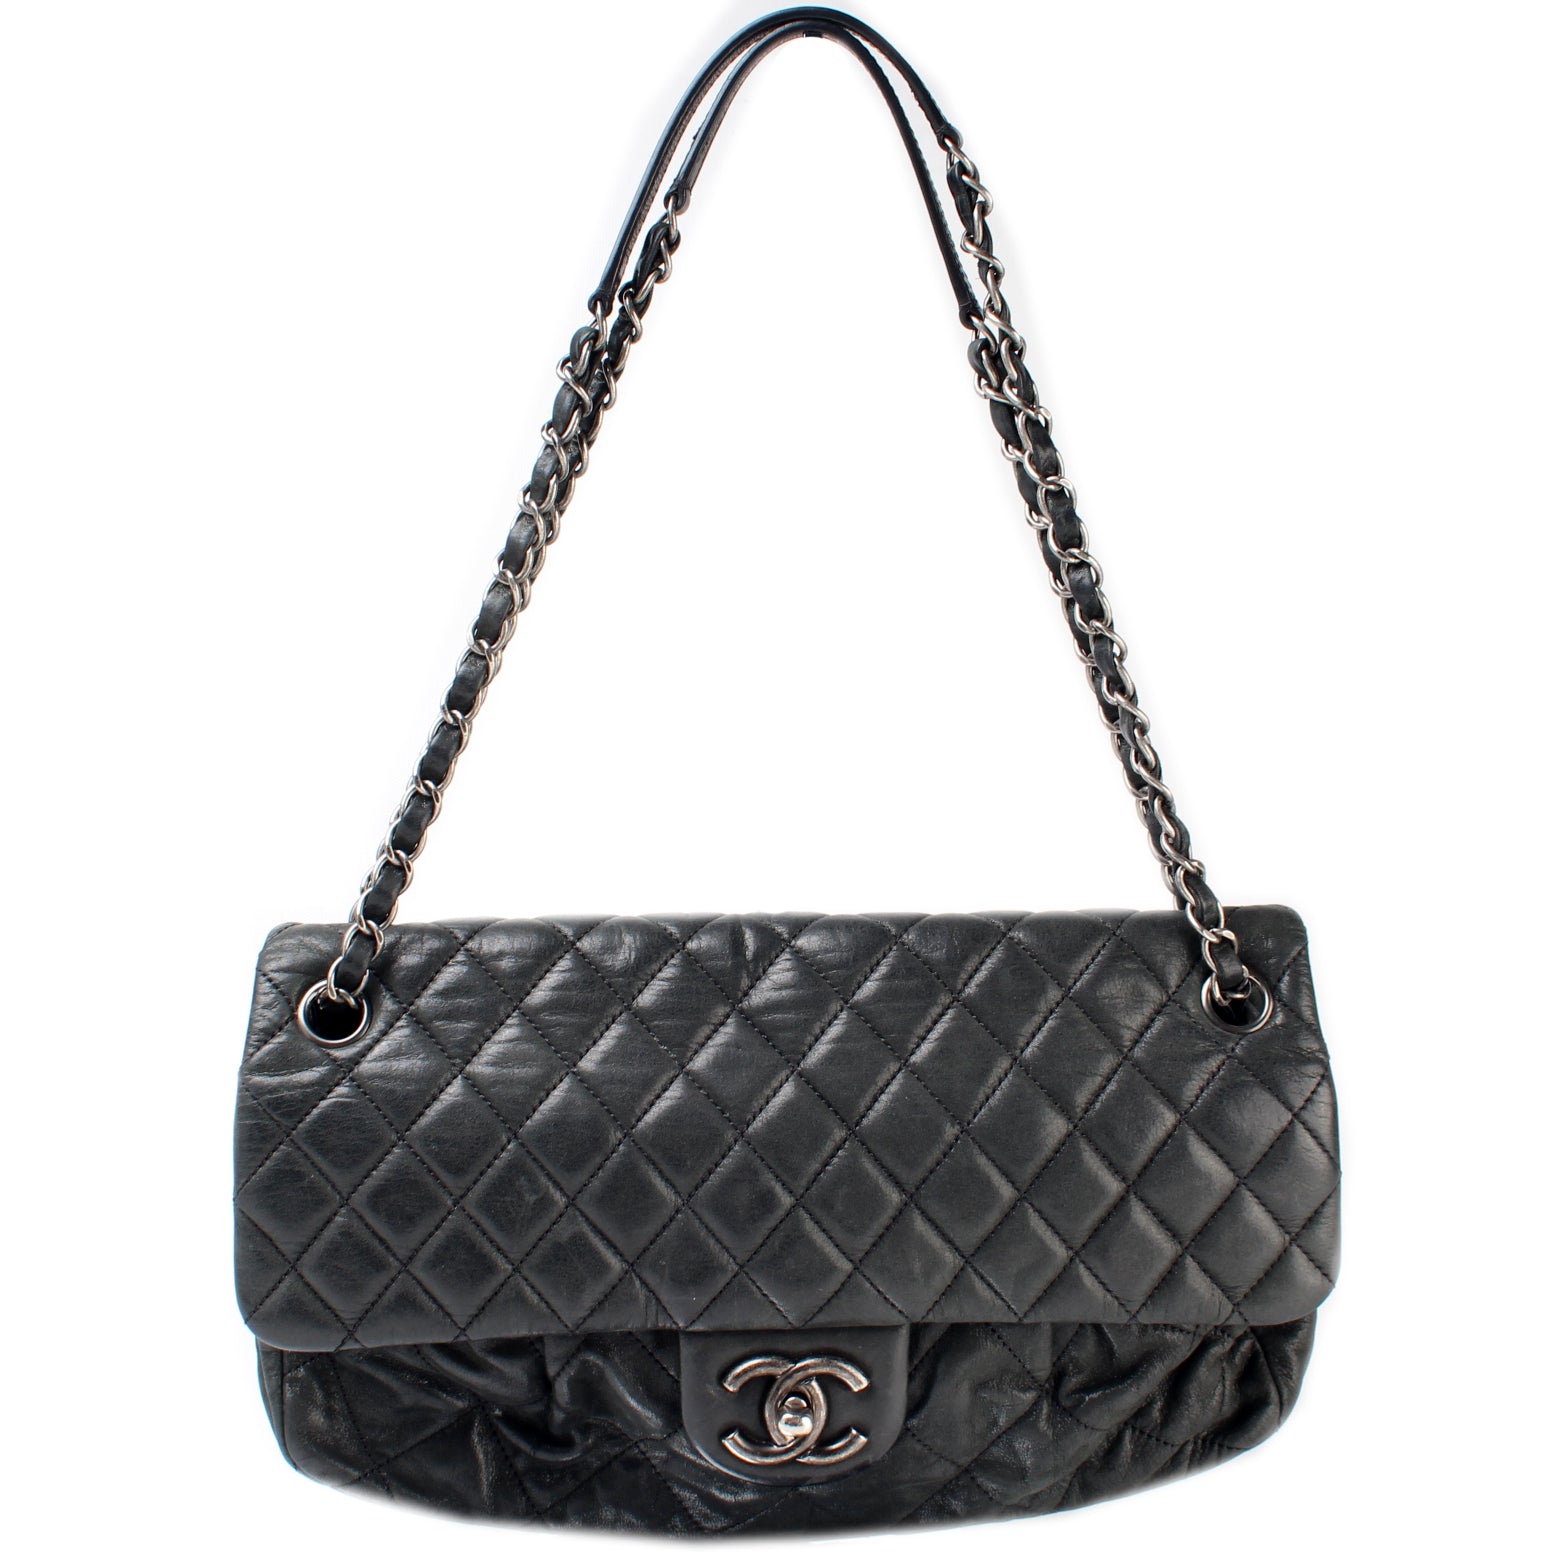 Chanel // 2019 Ecru Caviar Leather Coco Luxe Flap Bag – VSP